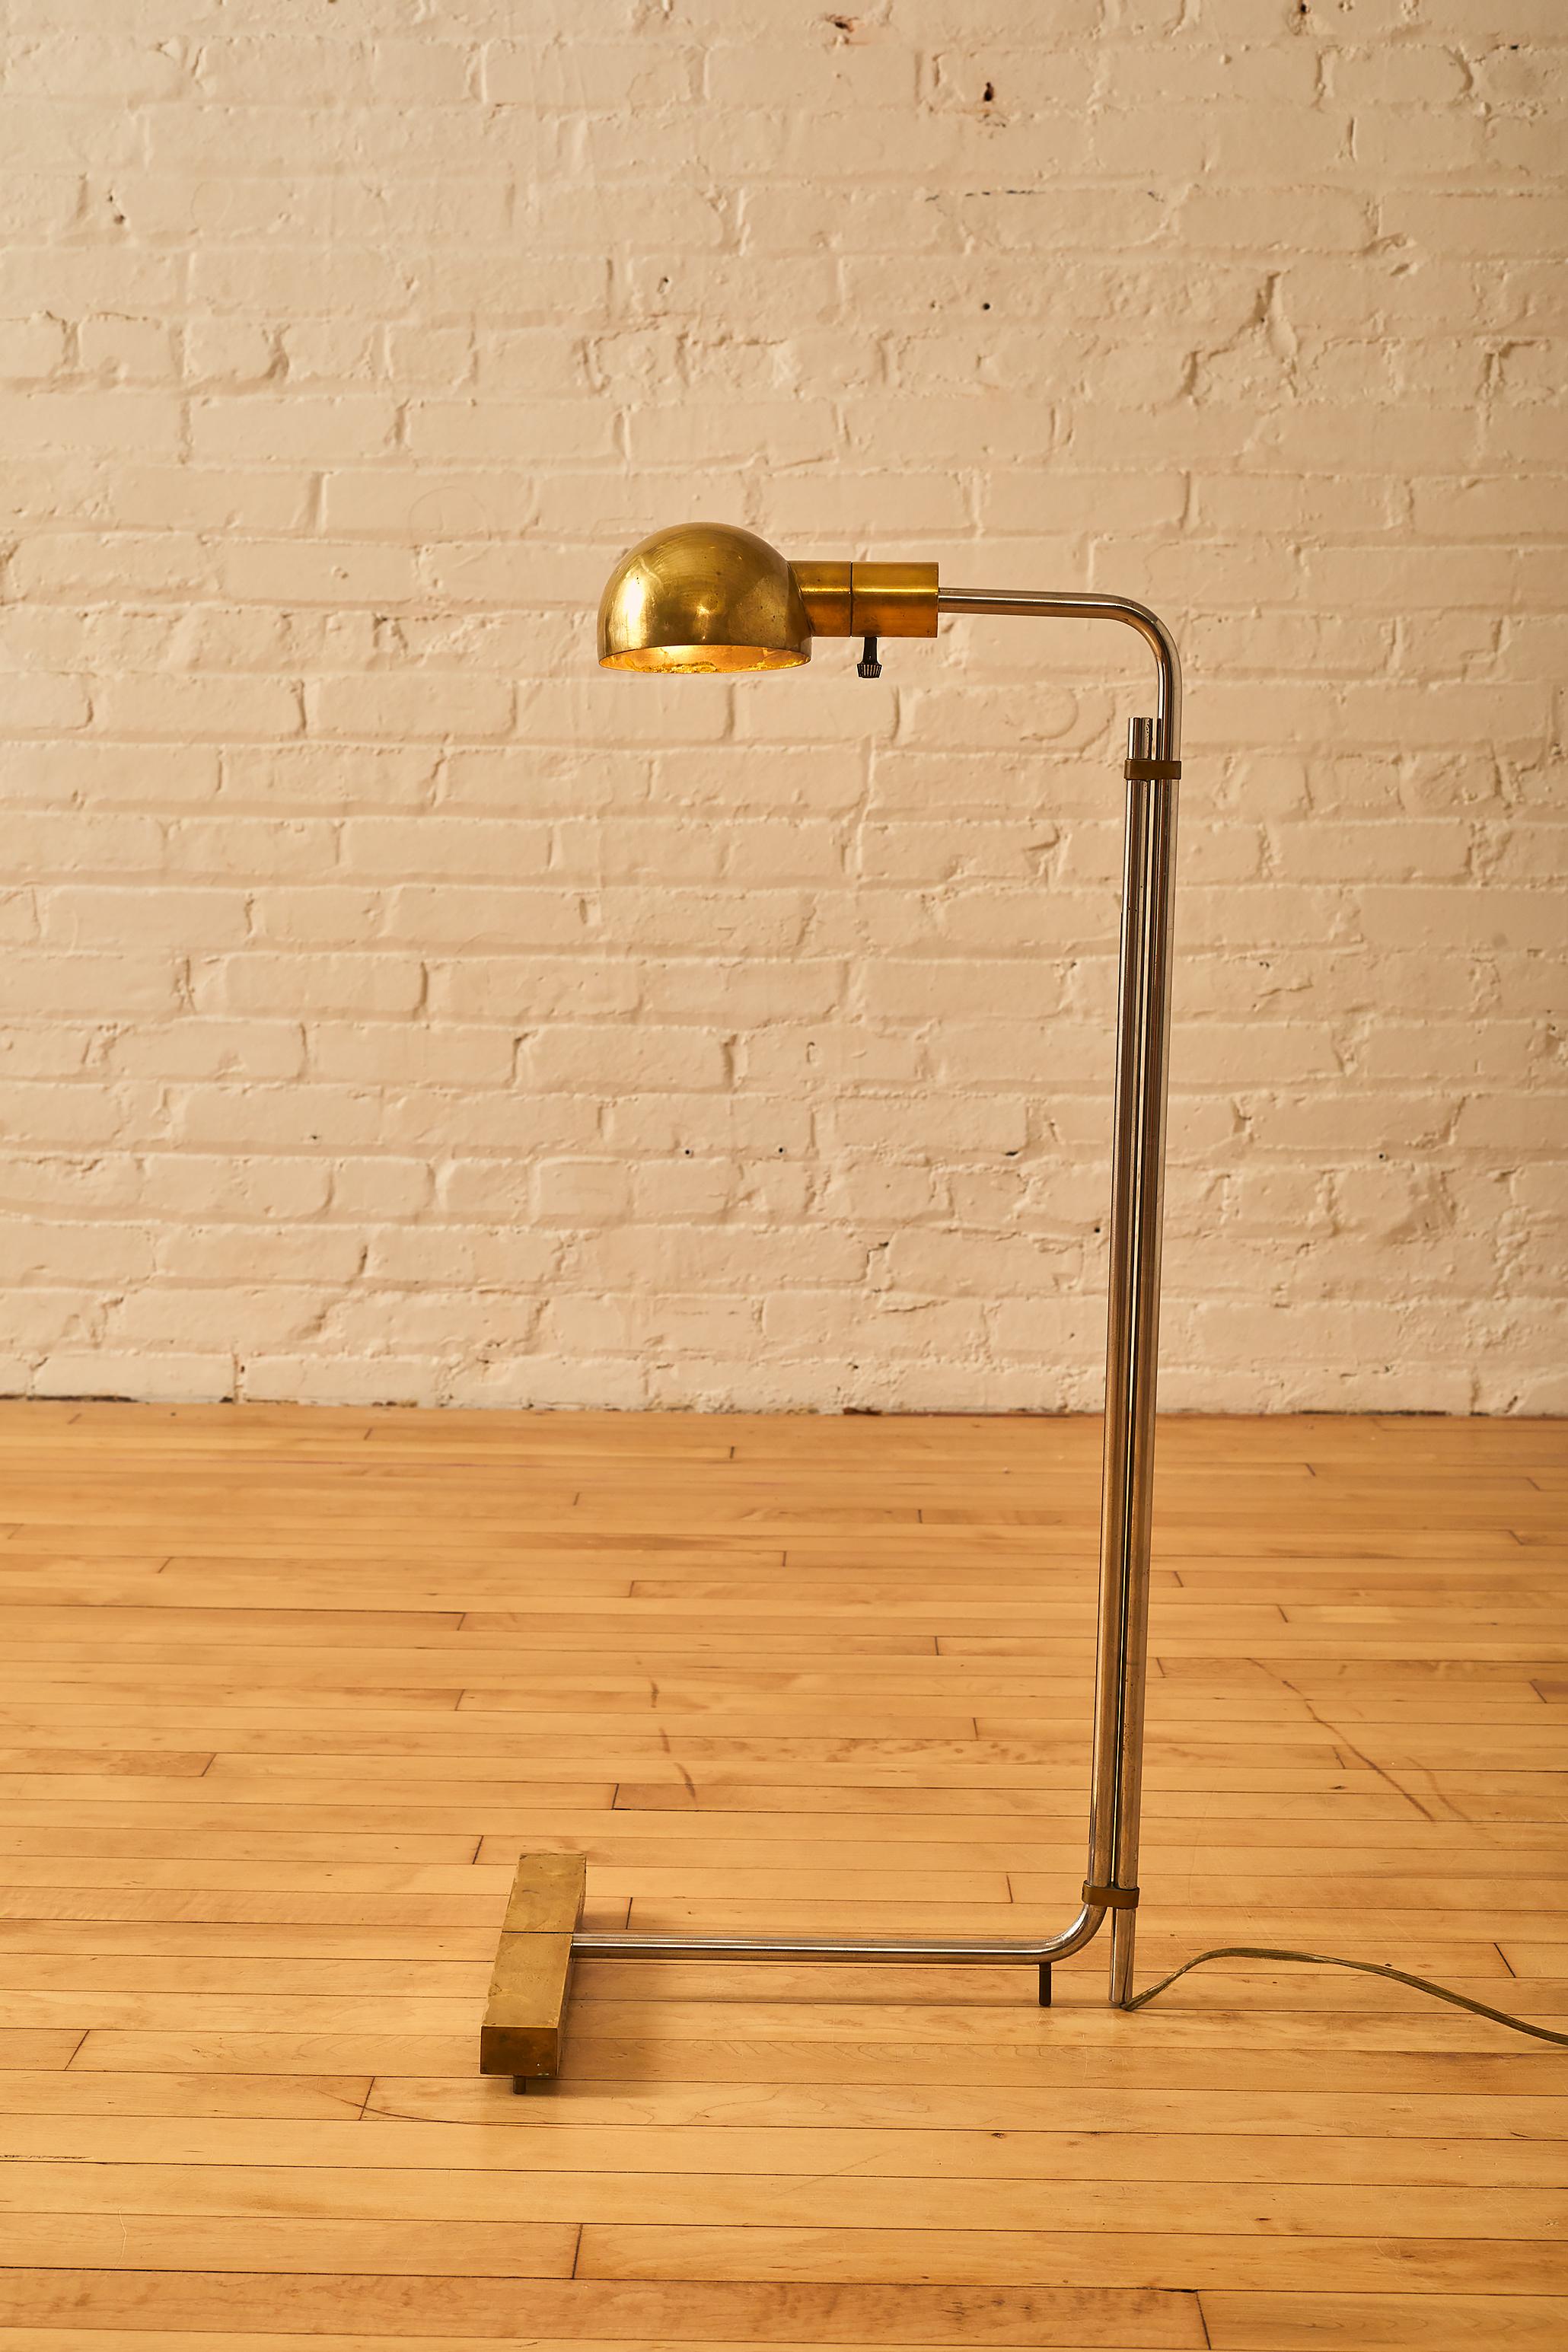 Brass and Chrome floor lamp by Cedric Hartman.

